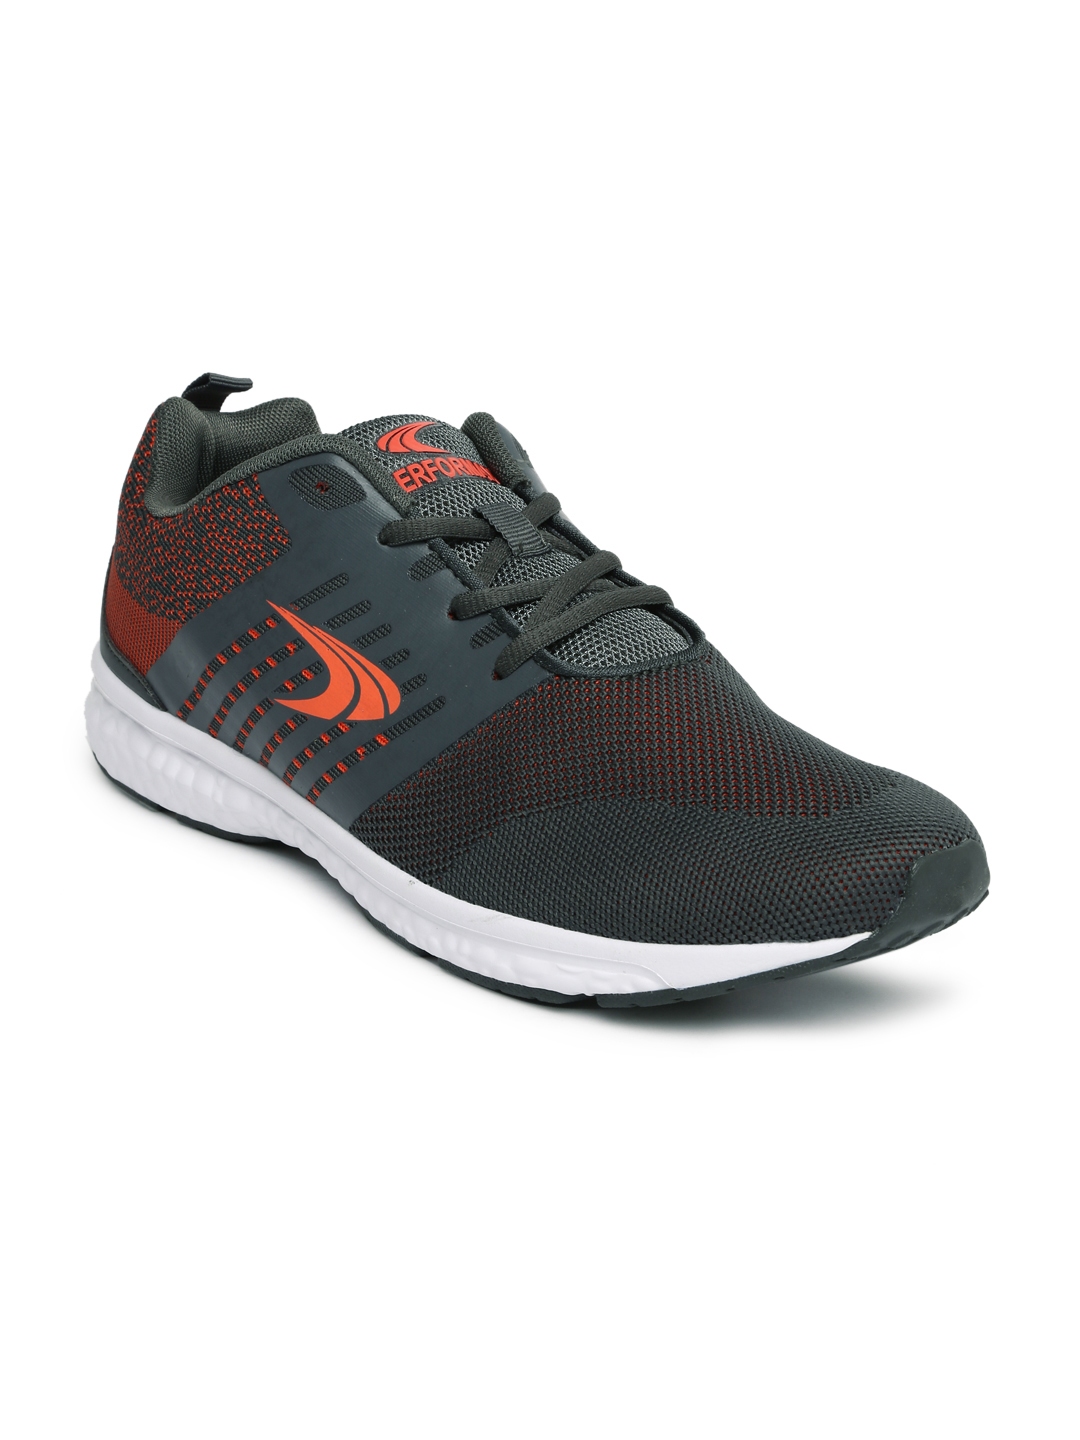 Buy Performax Men Grey & Orange Running Shoes - Sports Shoes for Men ...